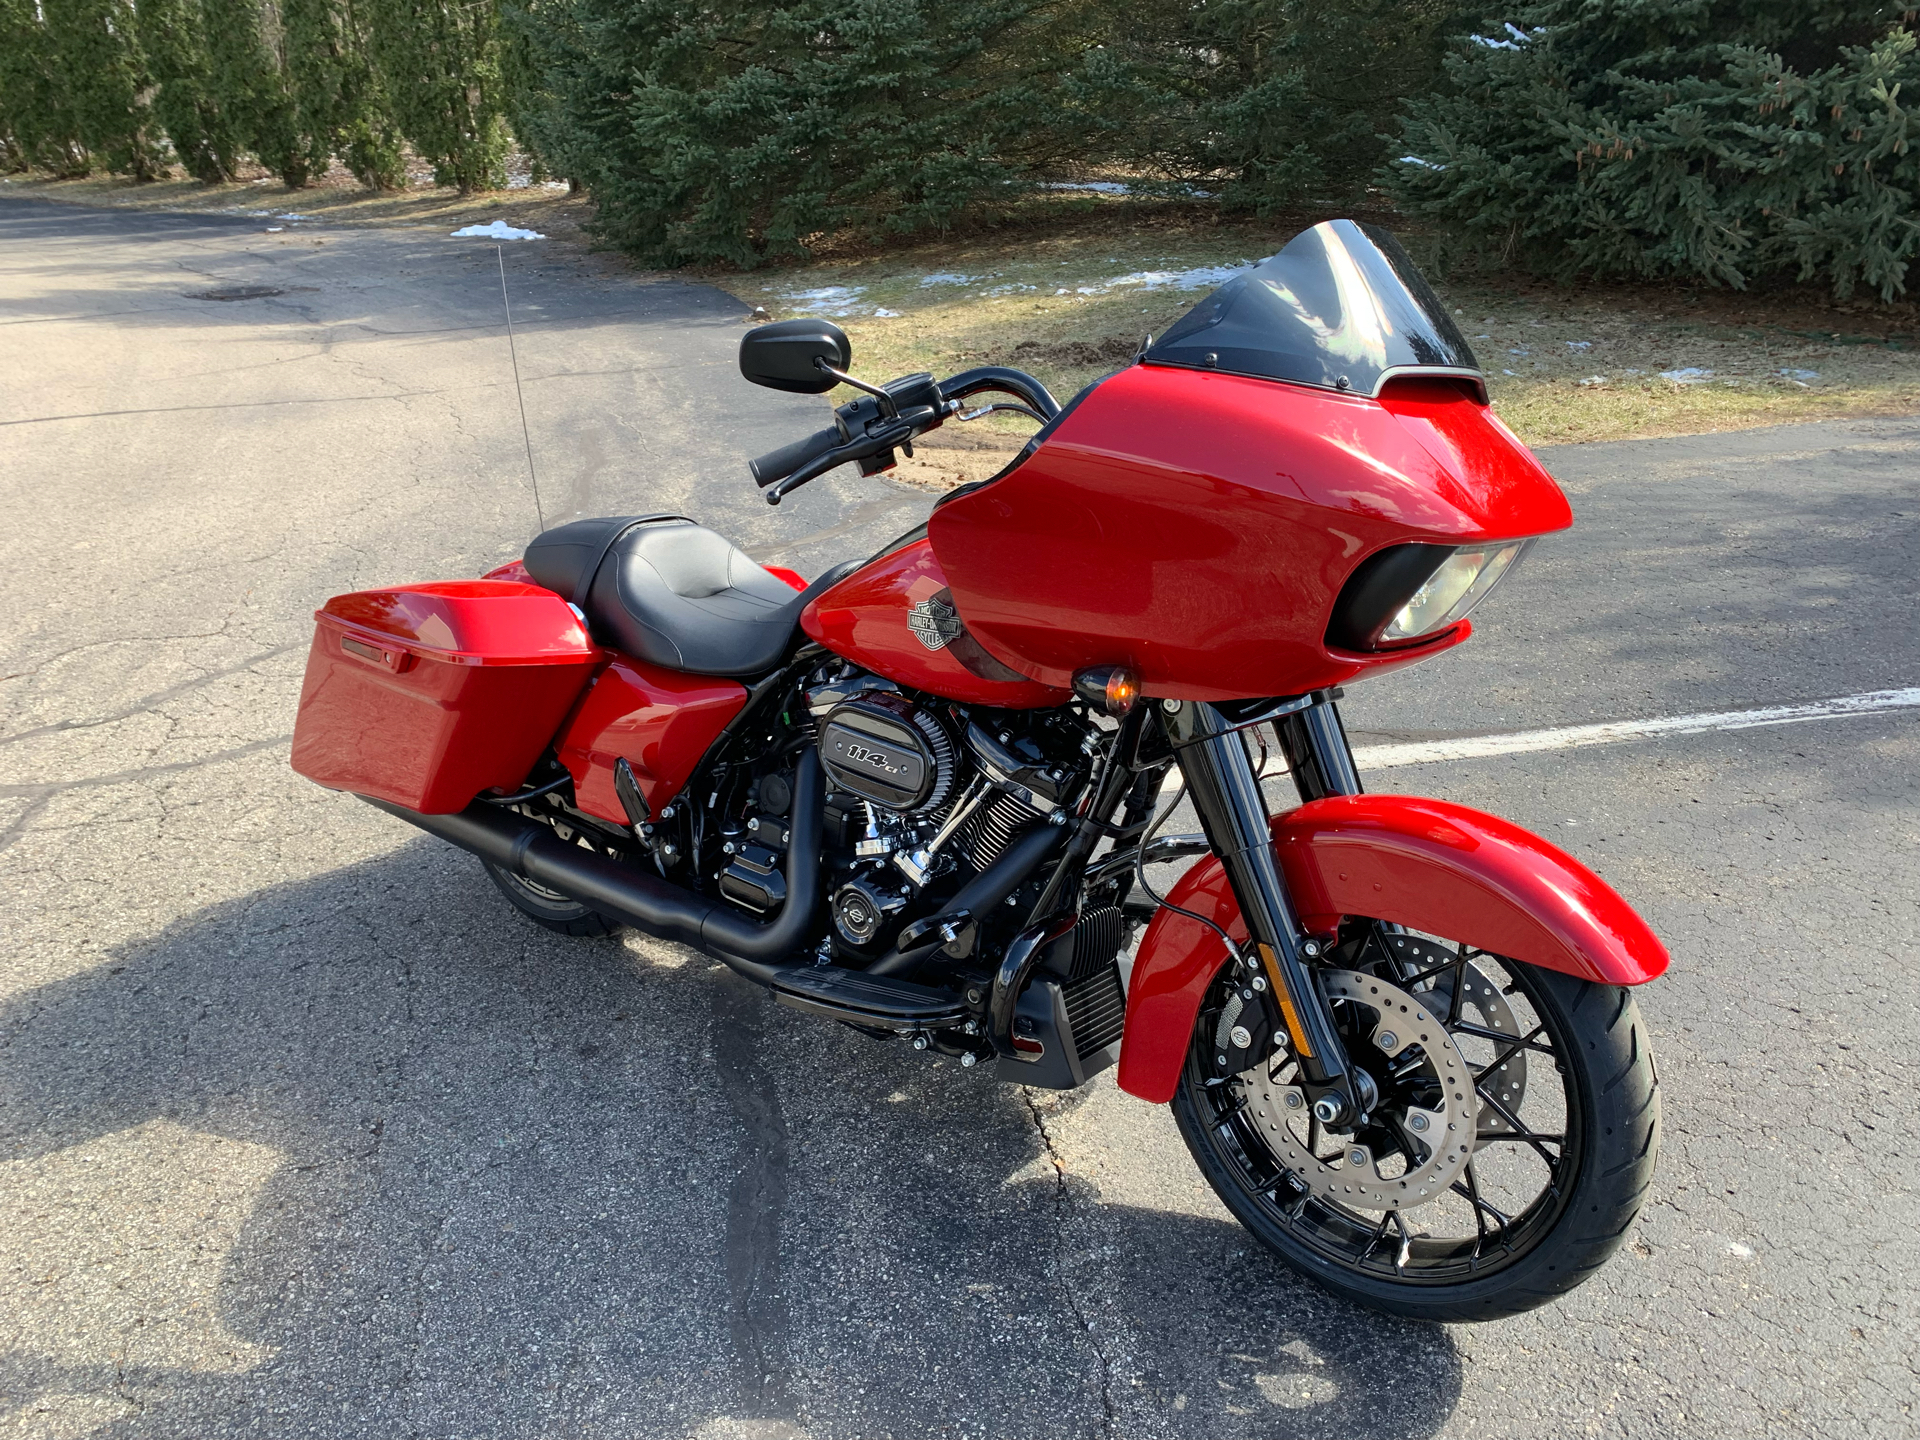 2022 Harley-Davidson Road Glide® Special in Portage, Michigan - Photo 11